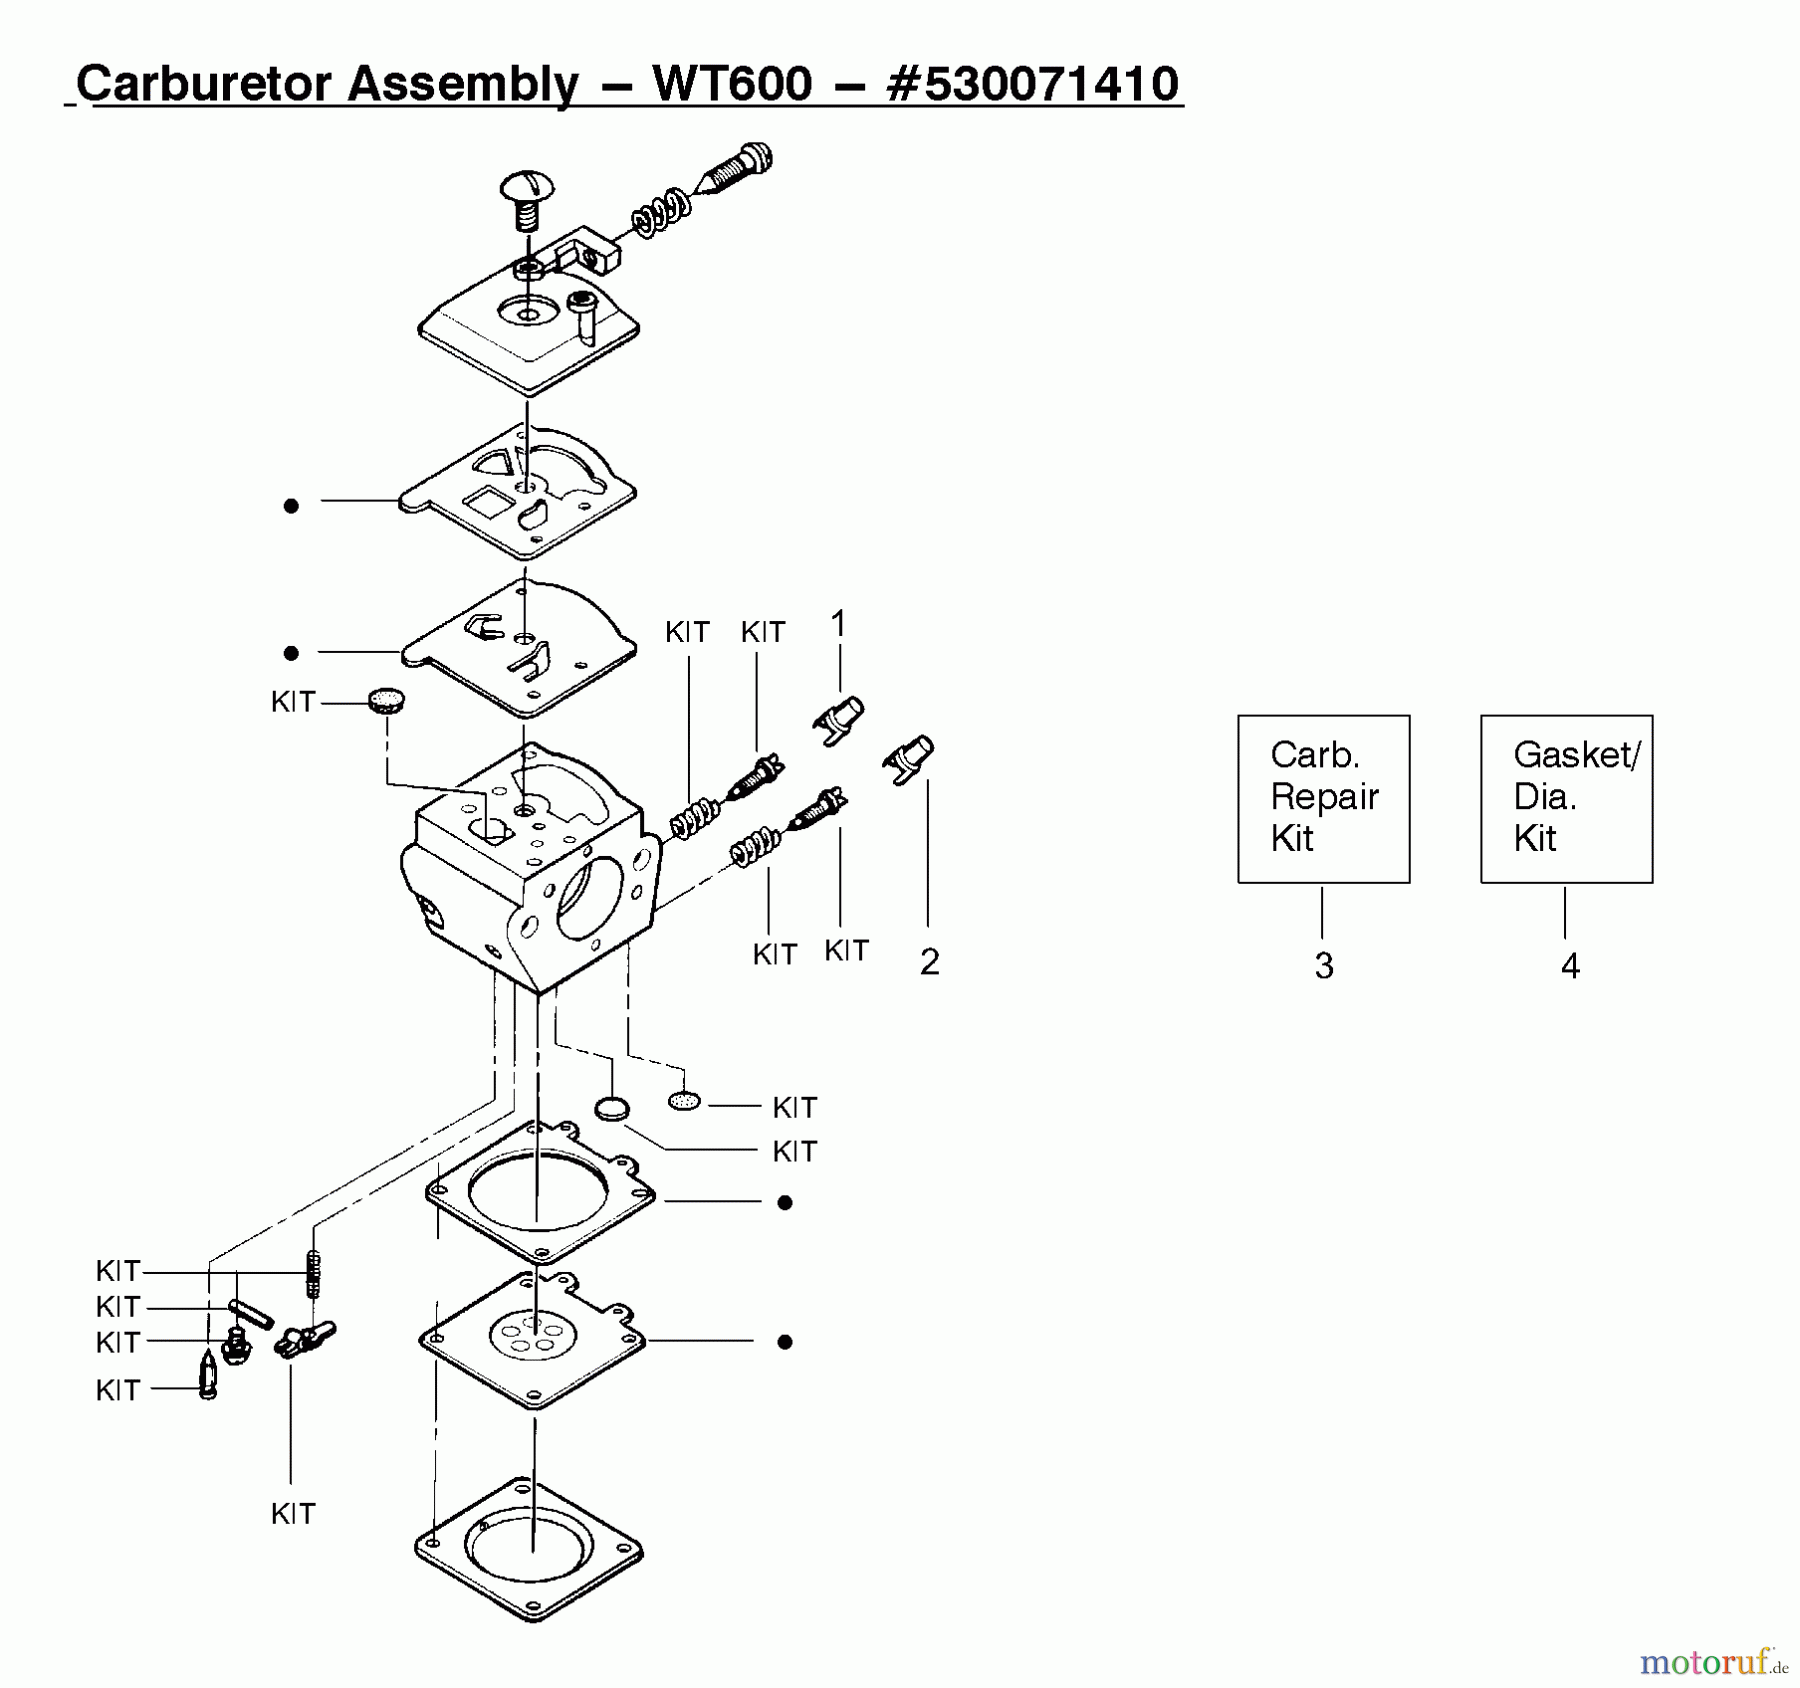  Poulan / Weed Eater Motorsägen 2175LE - Poulan Wildthing Chainsaw Carburetor Assembly (WT600) 530071410